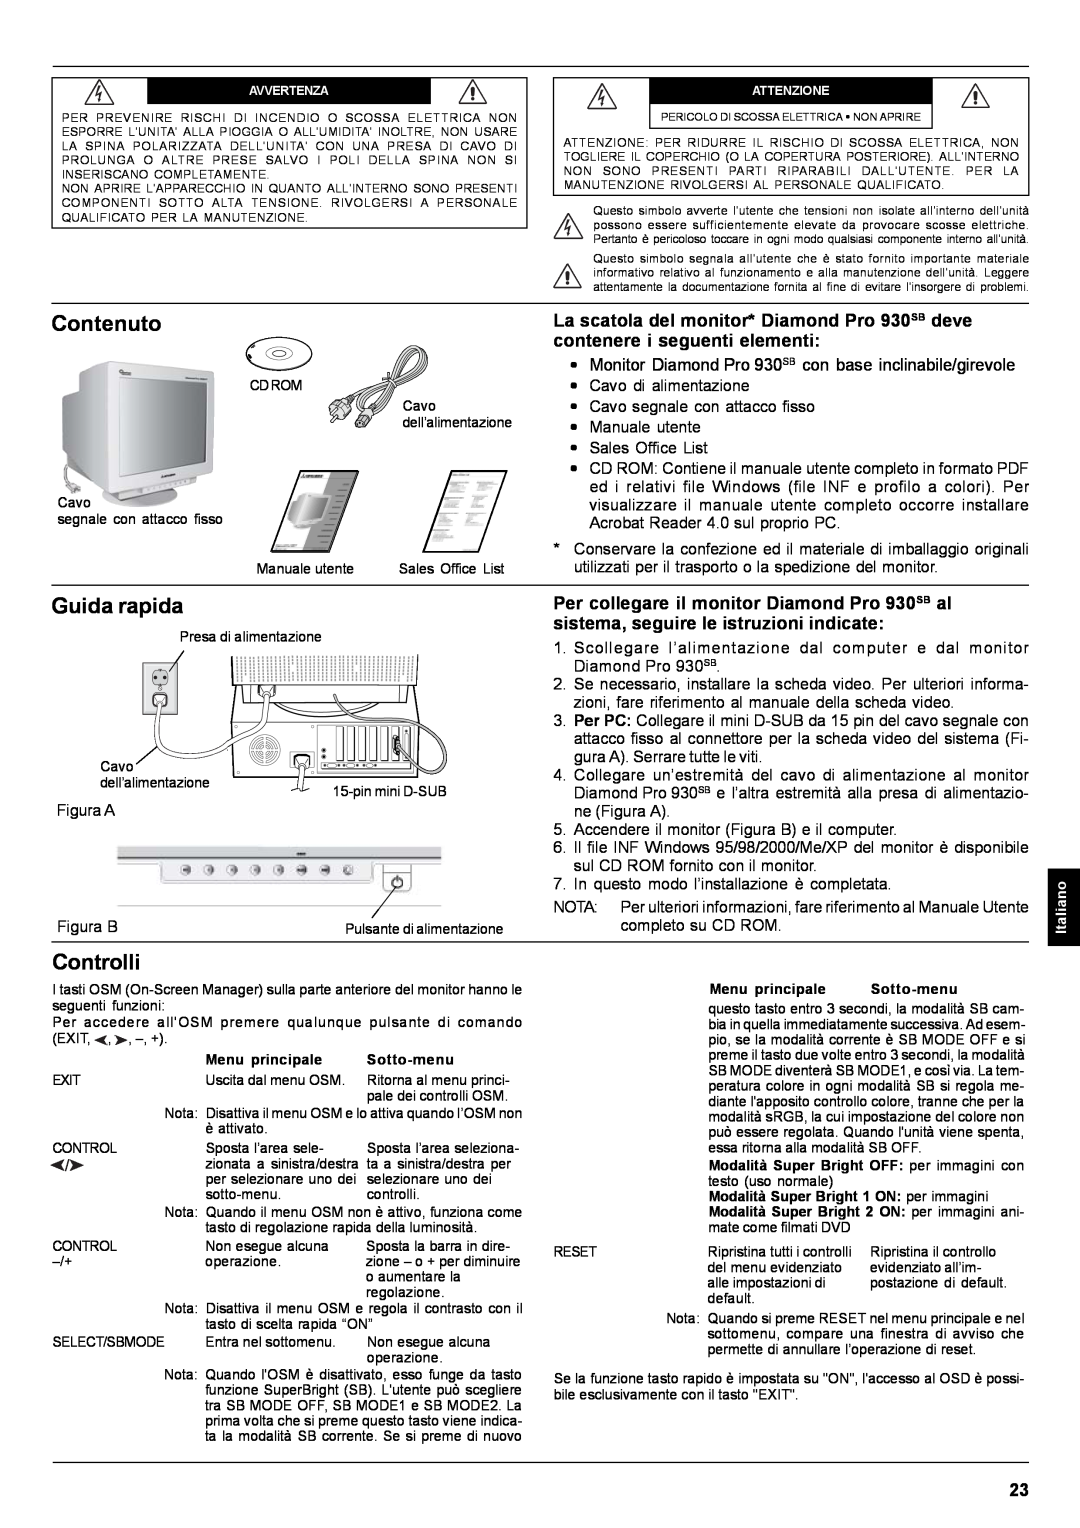 Mitsubishi Electronics Pro 930SB user manual Contenuto, Guida rapida, Controlli 